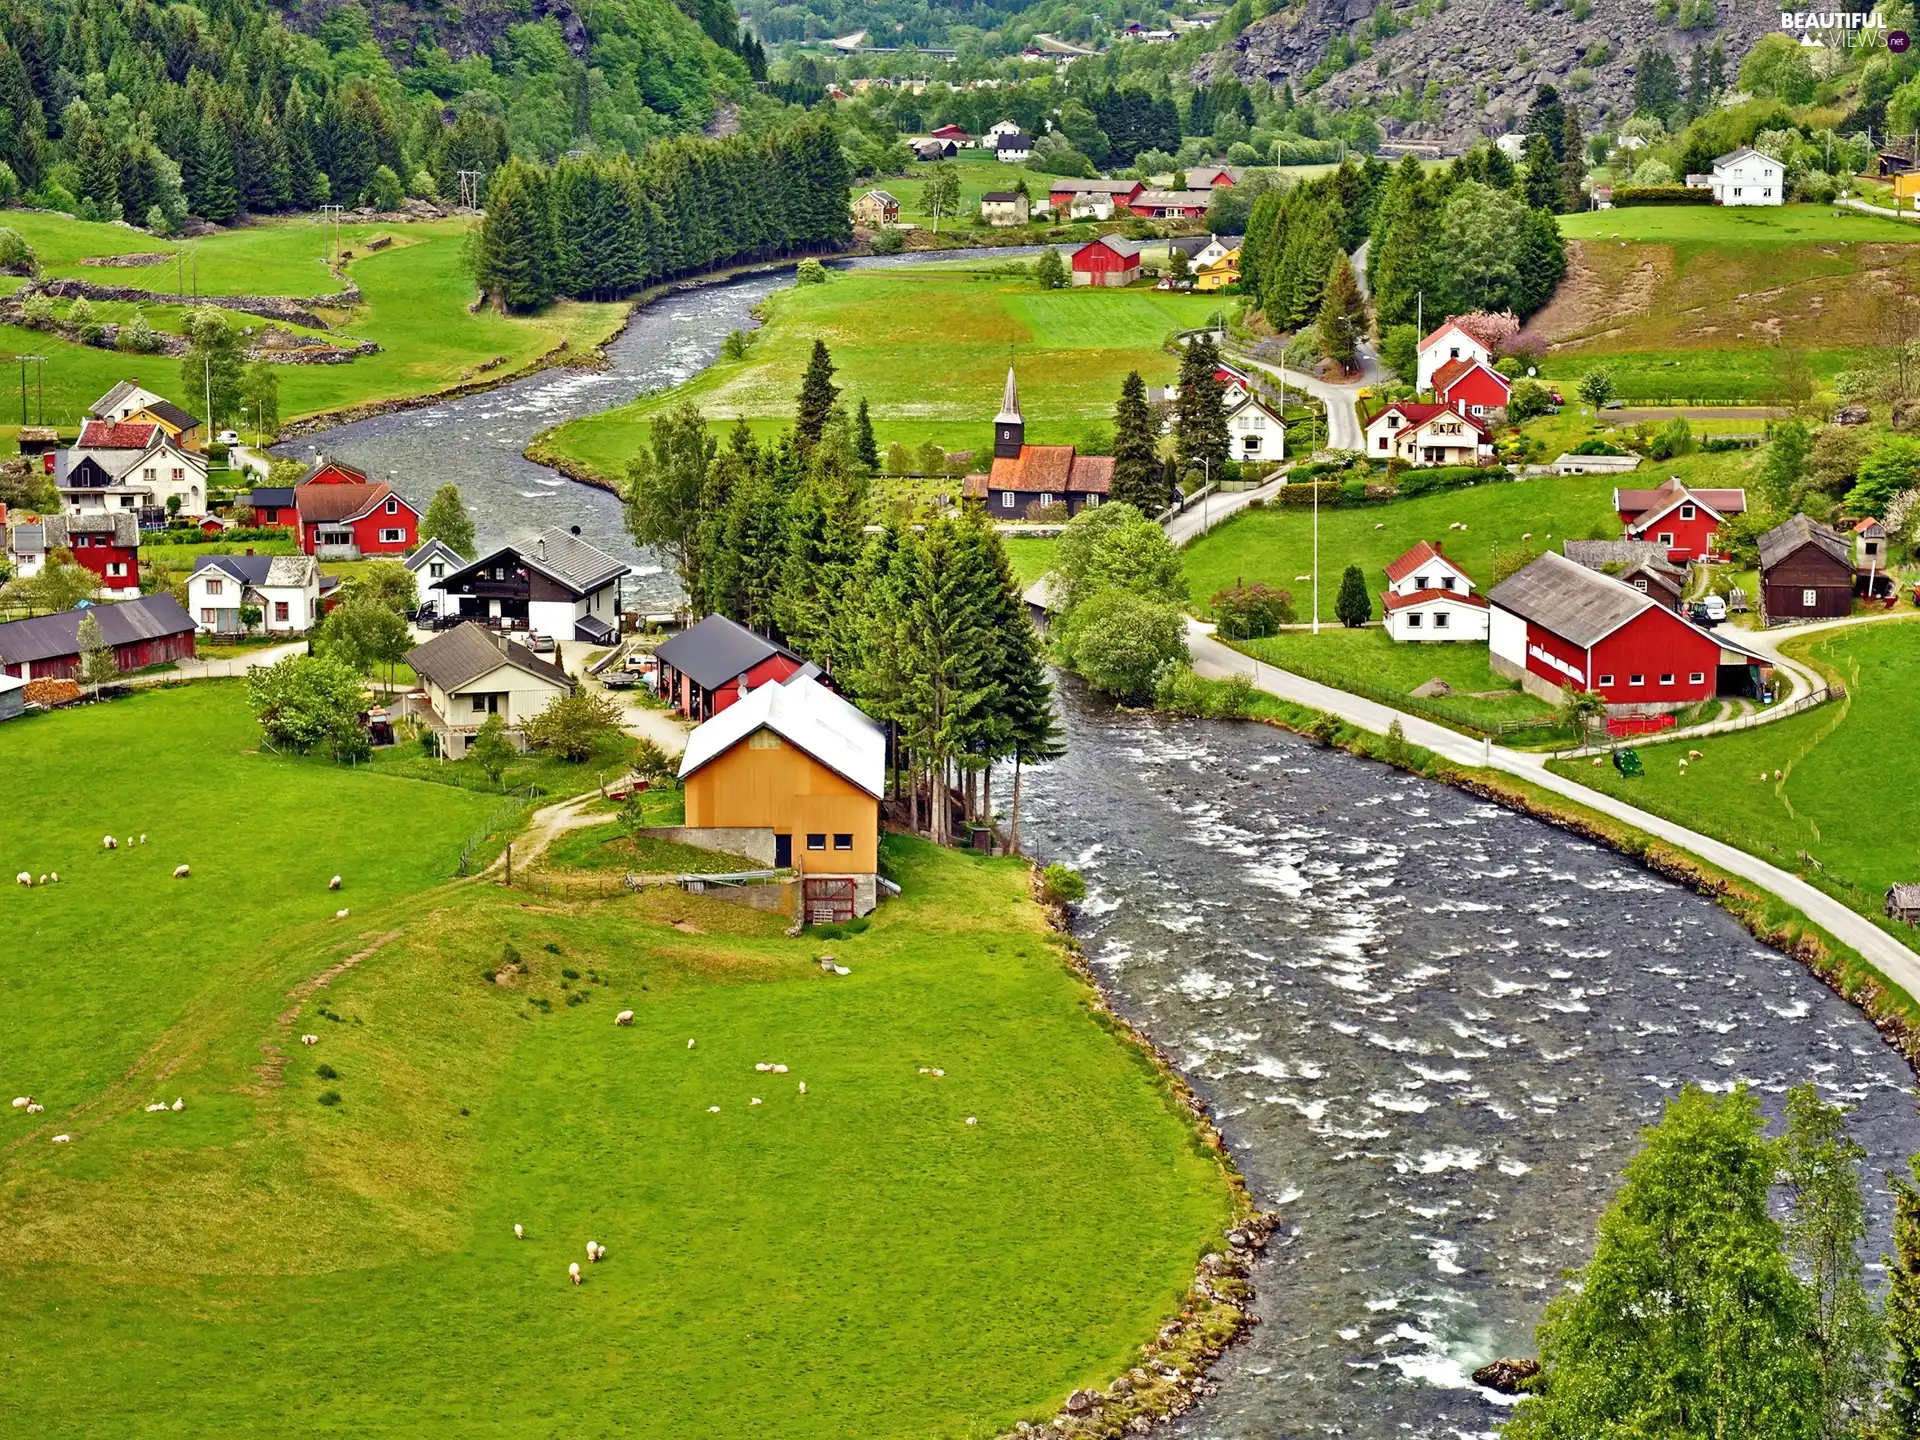 River, Houses, Norway, medows